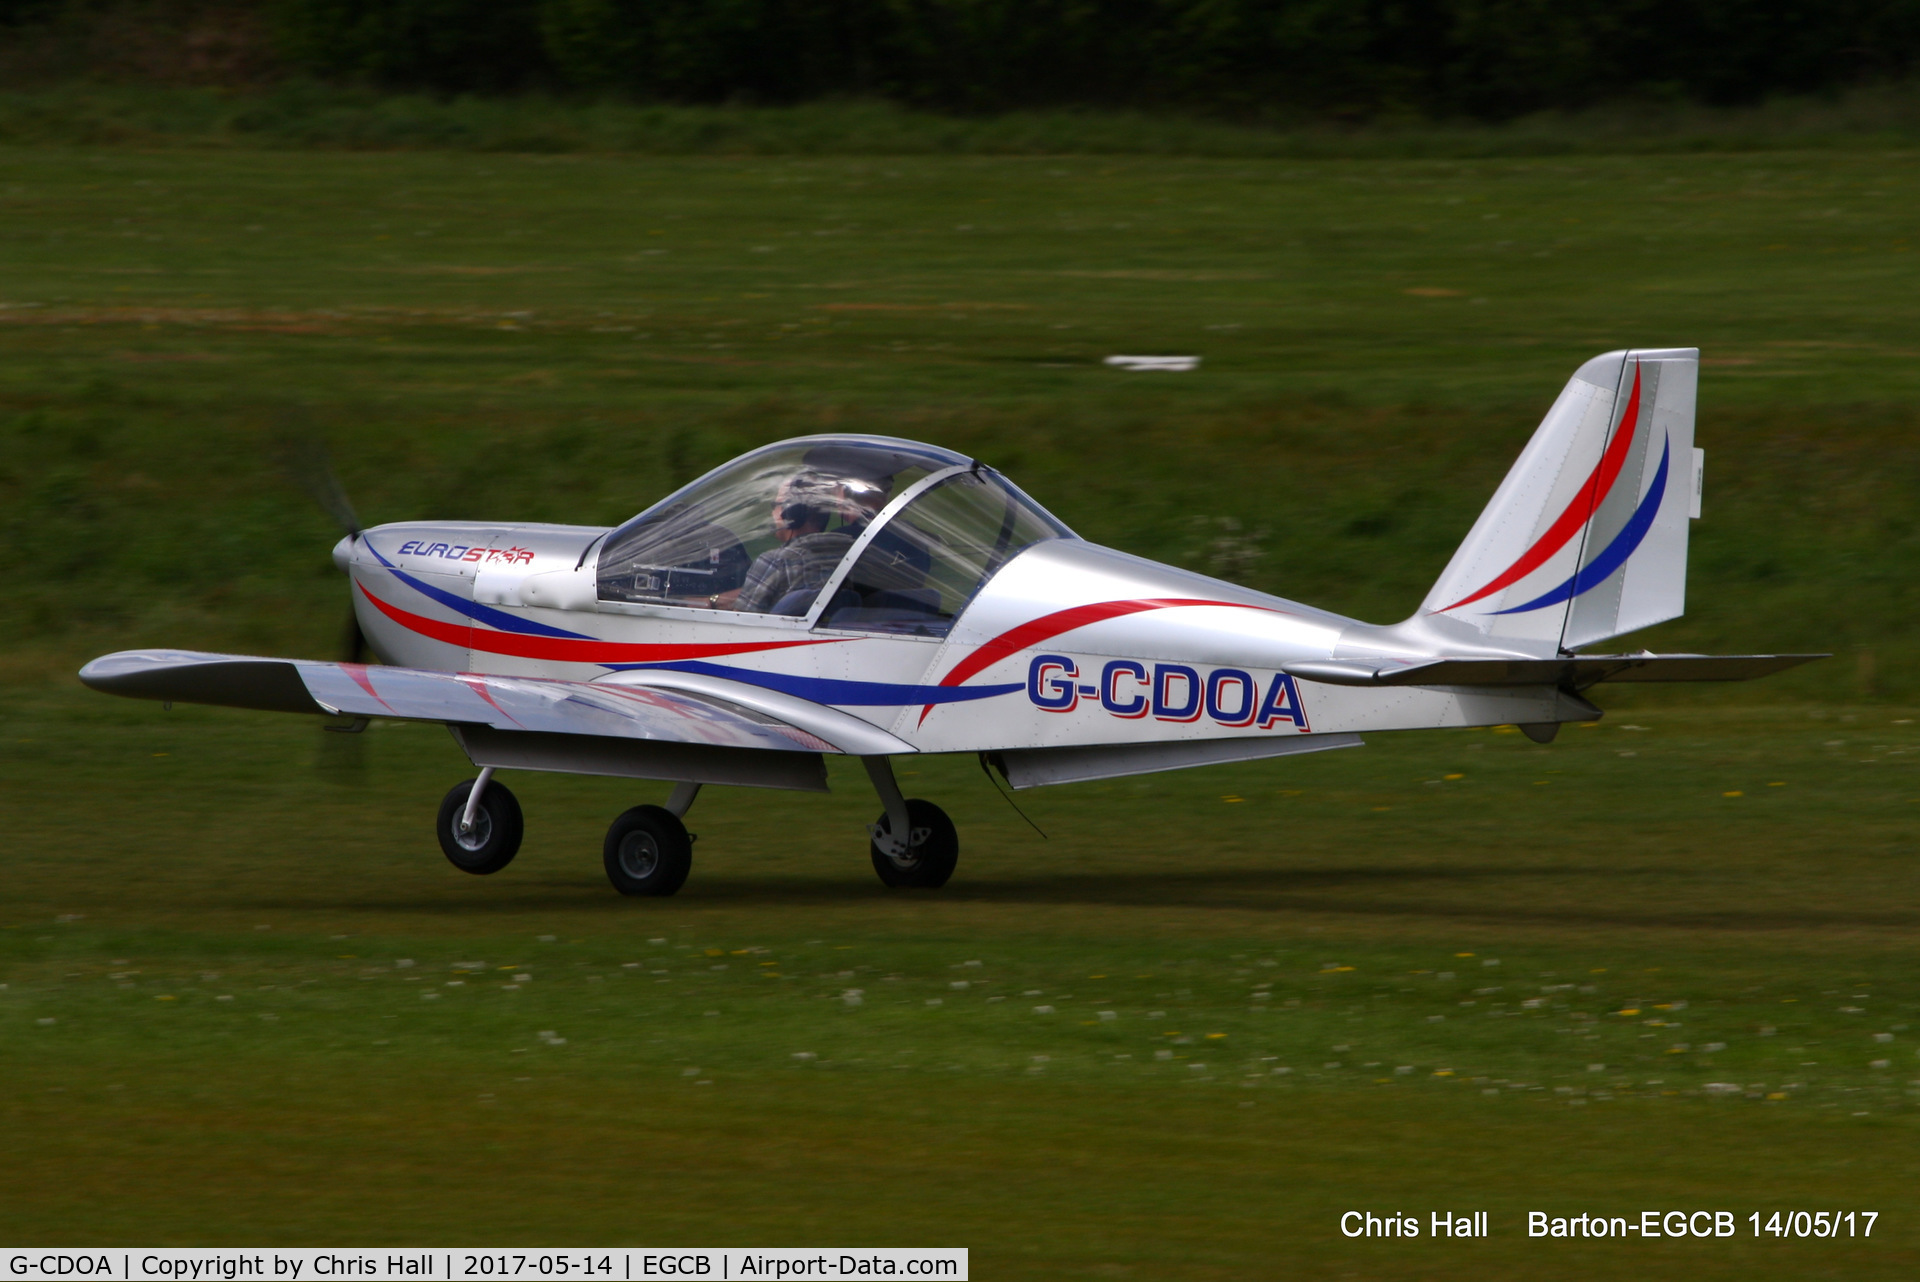 G-CDOA, 2005 Evektor-Aerotechnik EV-97 Teameurostar UK C/N 2506, at Barton